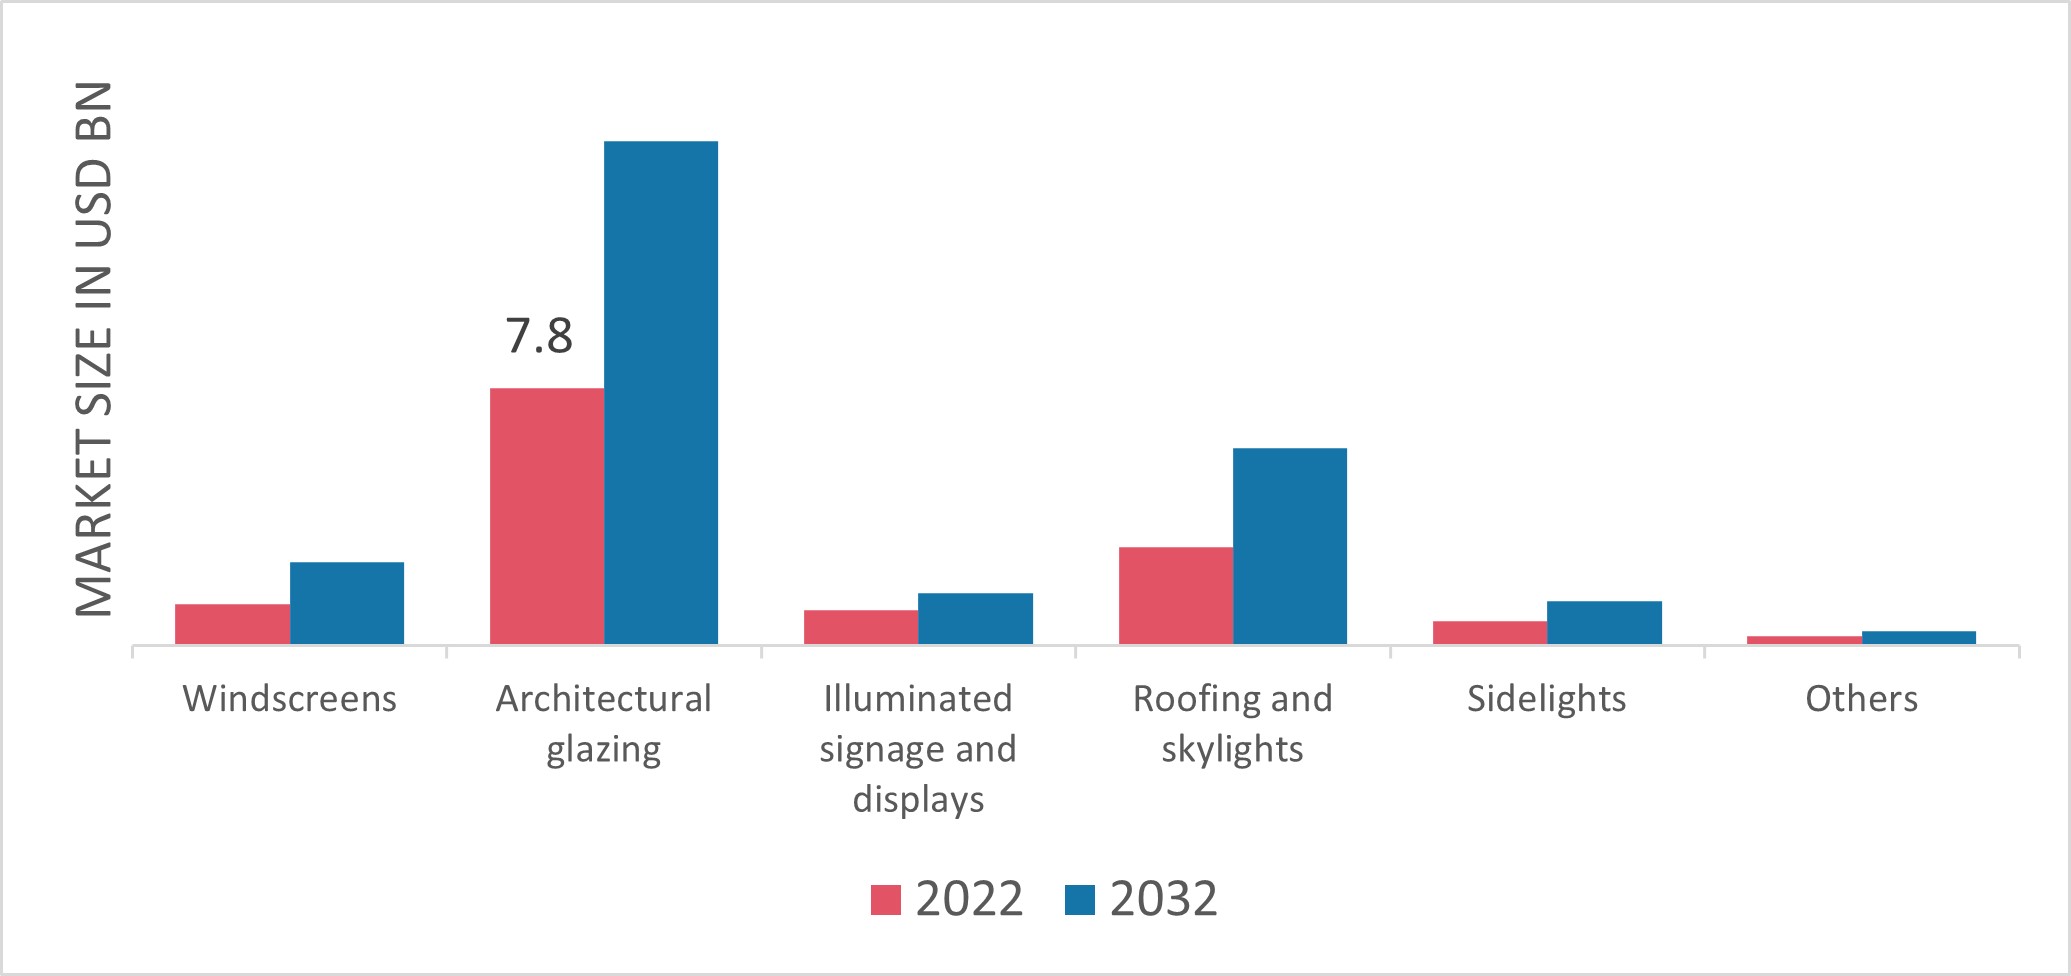 Polycarbonate Glazing Market, by Application, 2022 & 2032